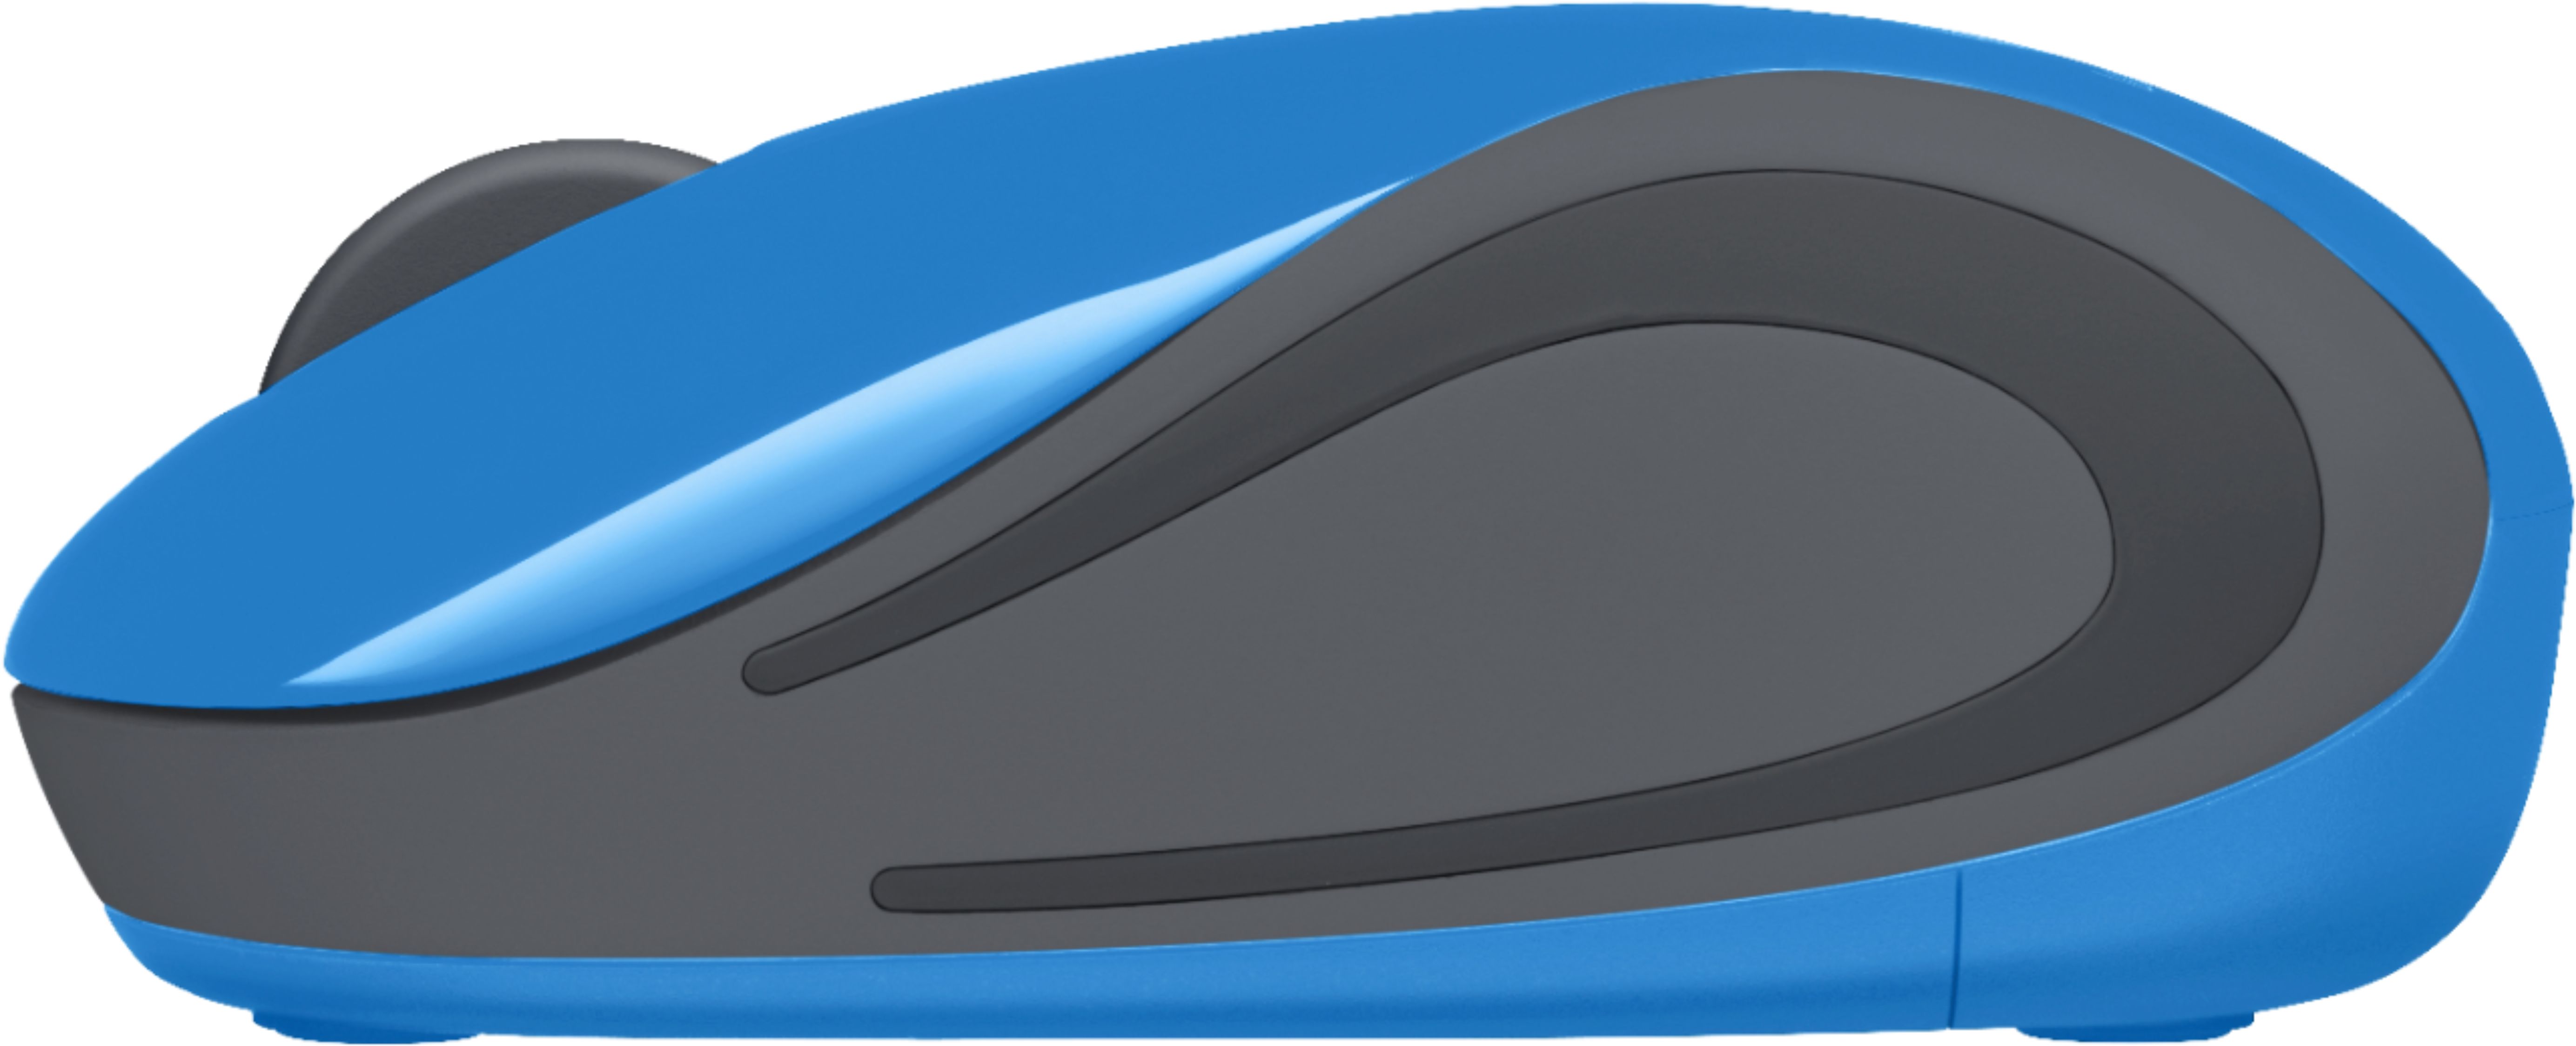 Optical Wireless Ambidextrous Buy: 910-002728 Mini Blue-gray Logitech Mouse M187 Best